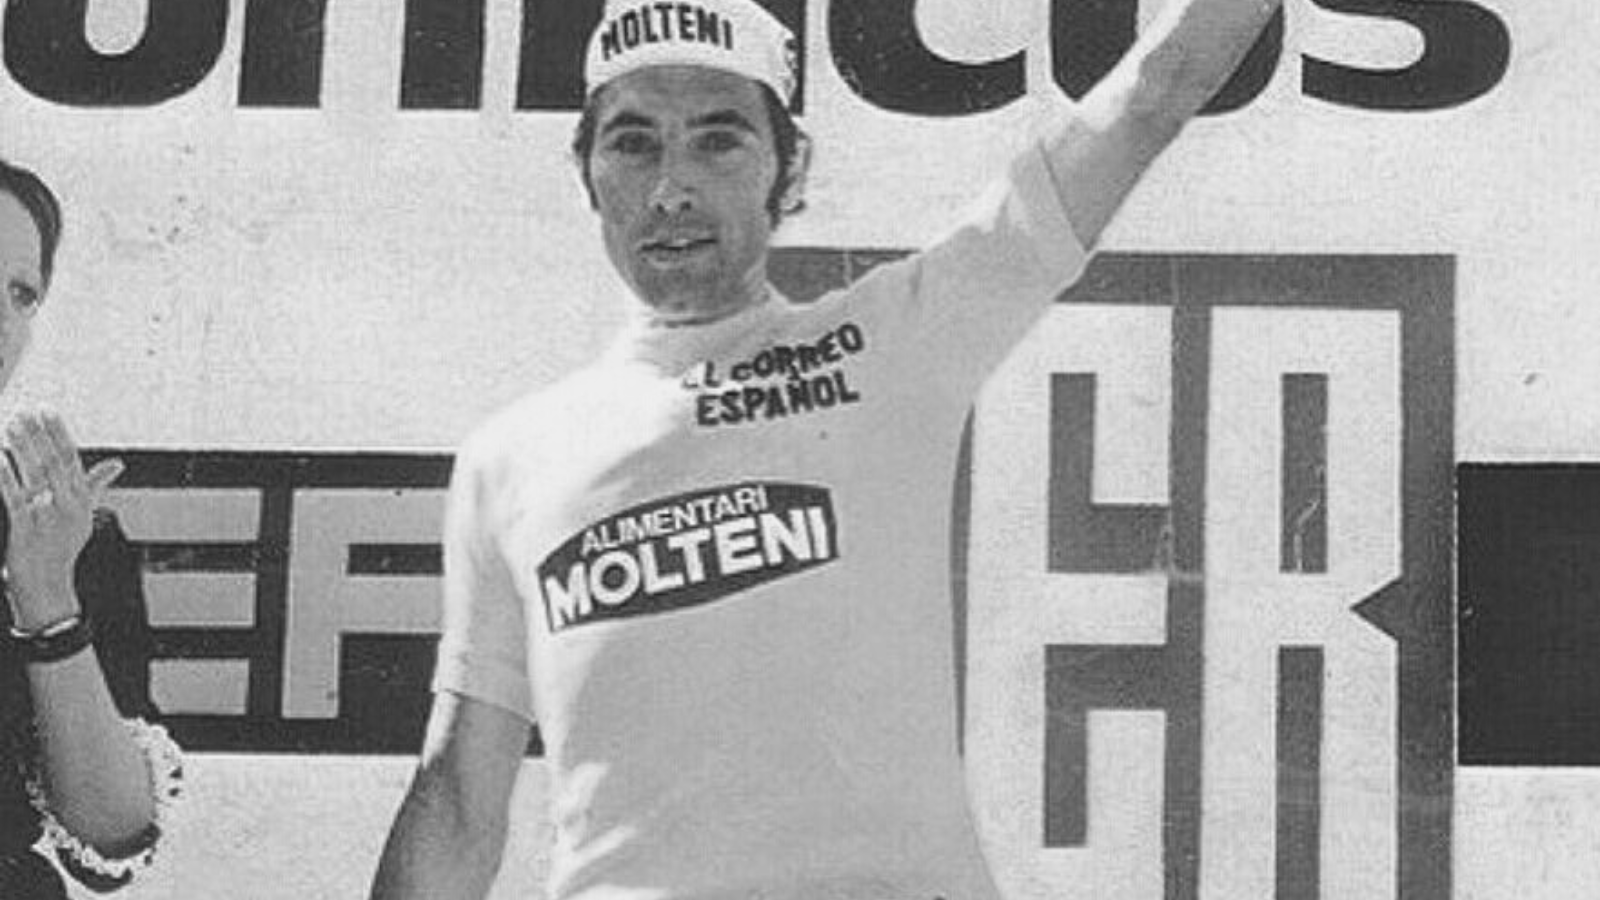 Eddy Merckx winning the Vuelta a Espana in 1973